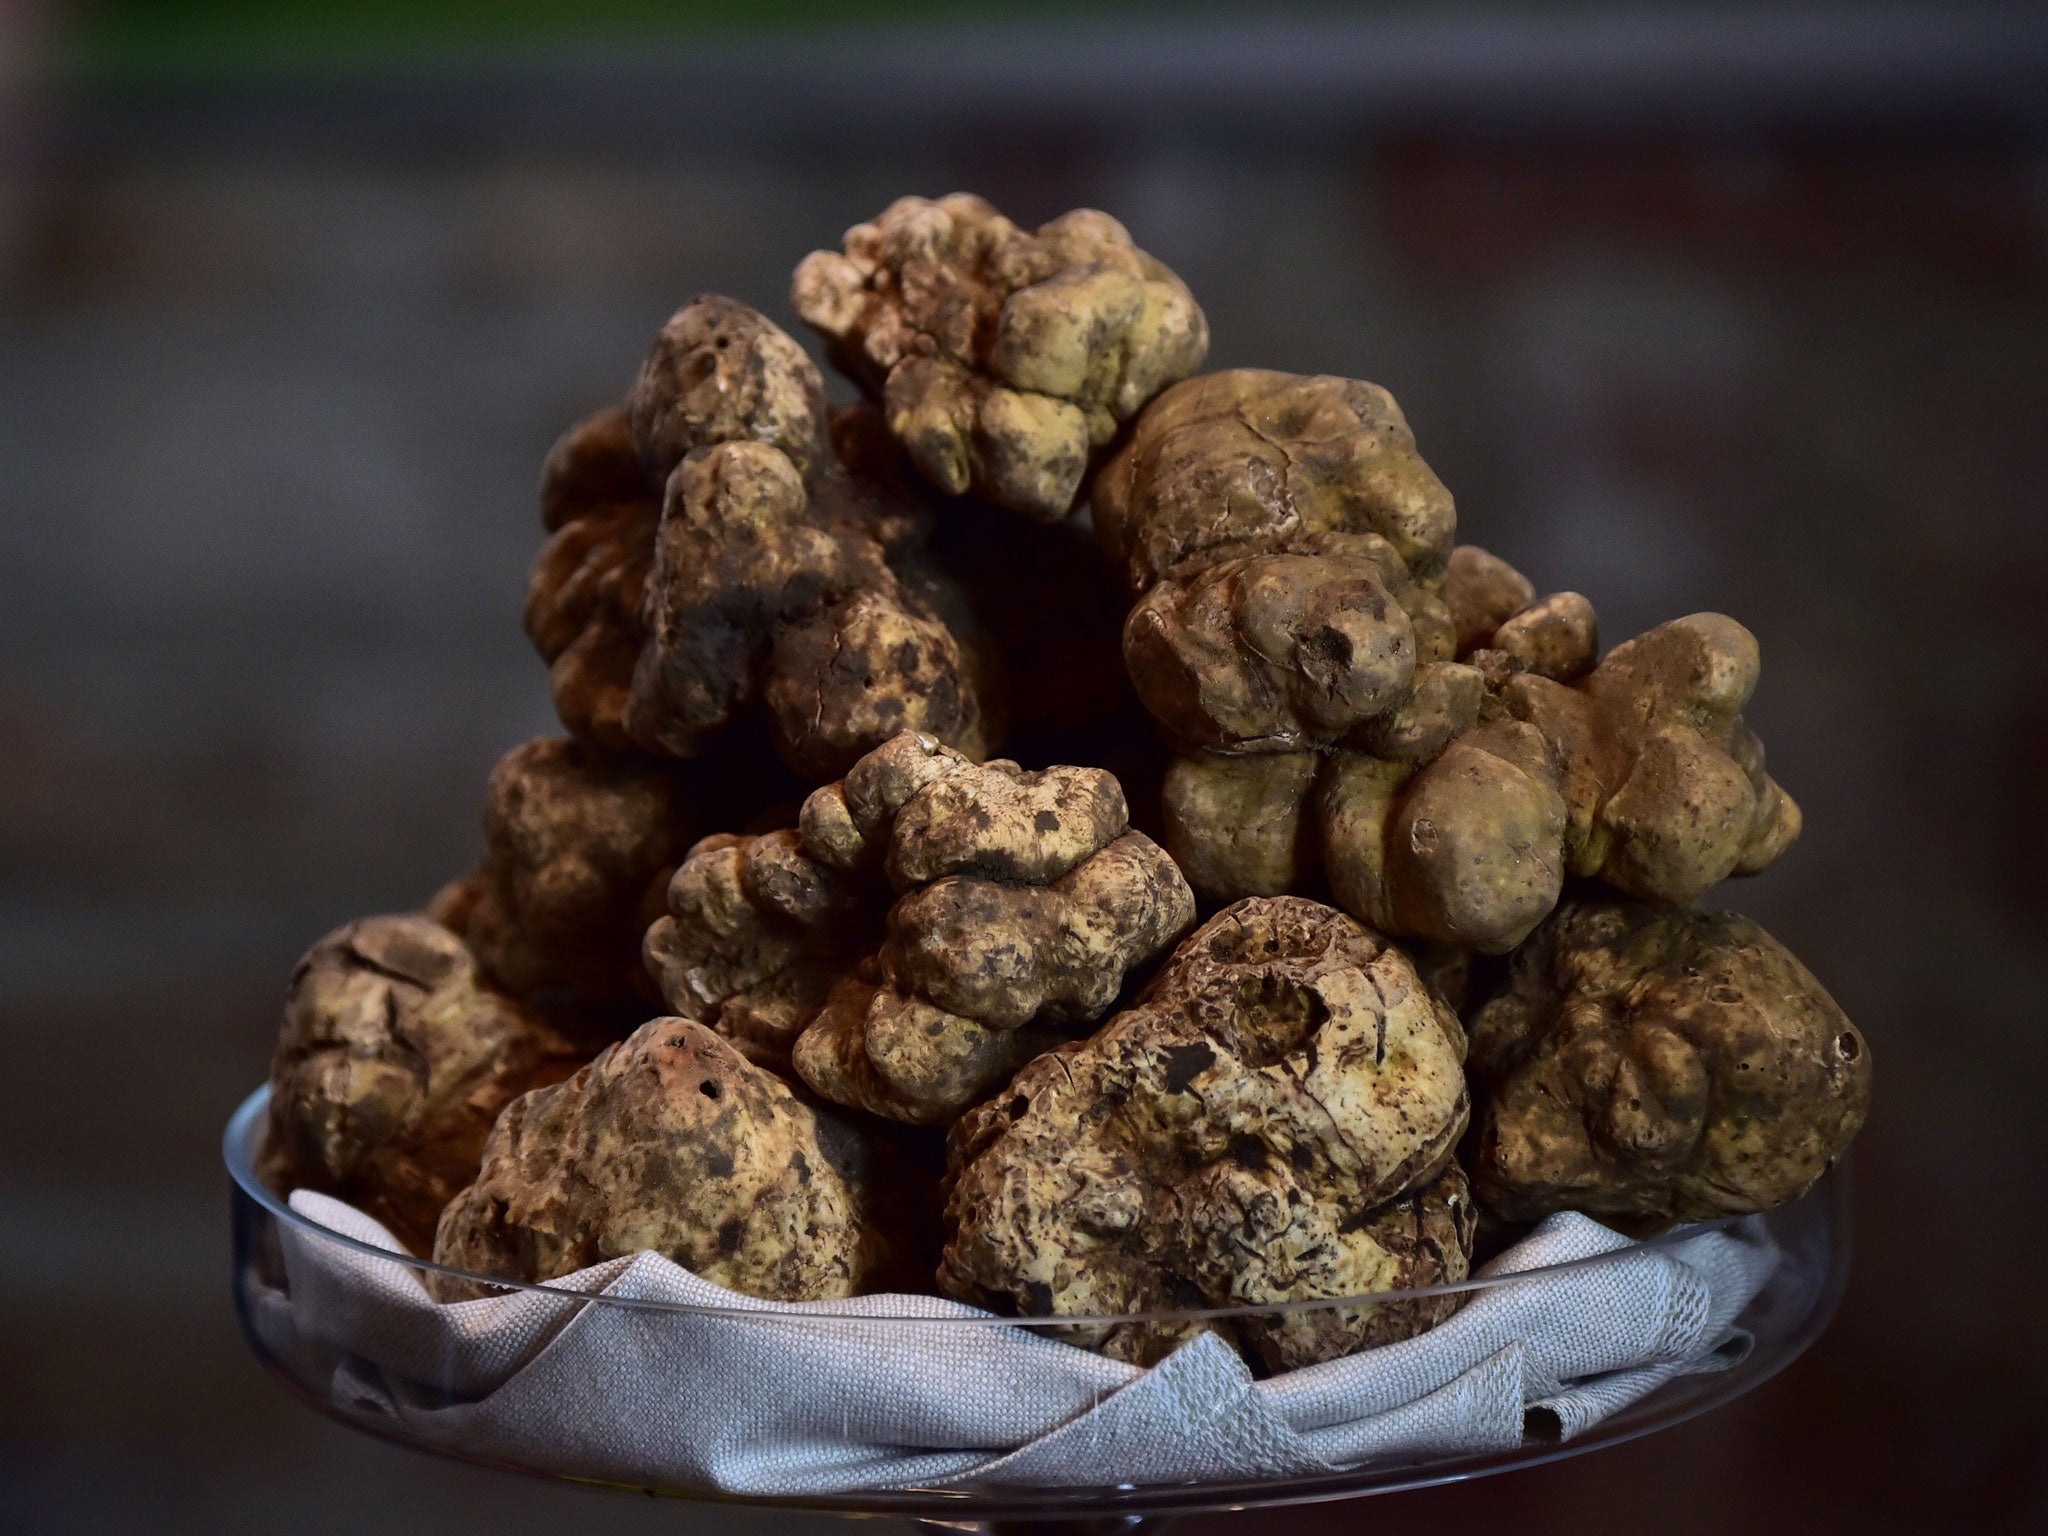 Alba truffles fetch prices of €3,500 a kilo